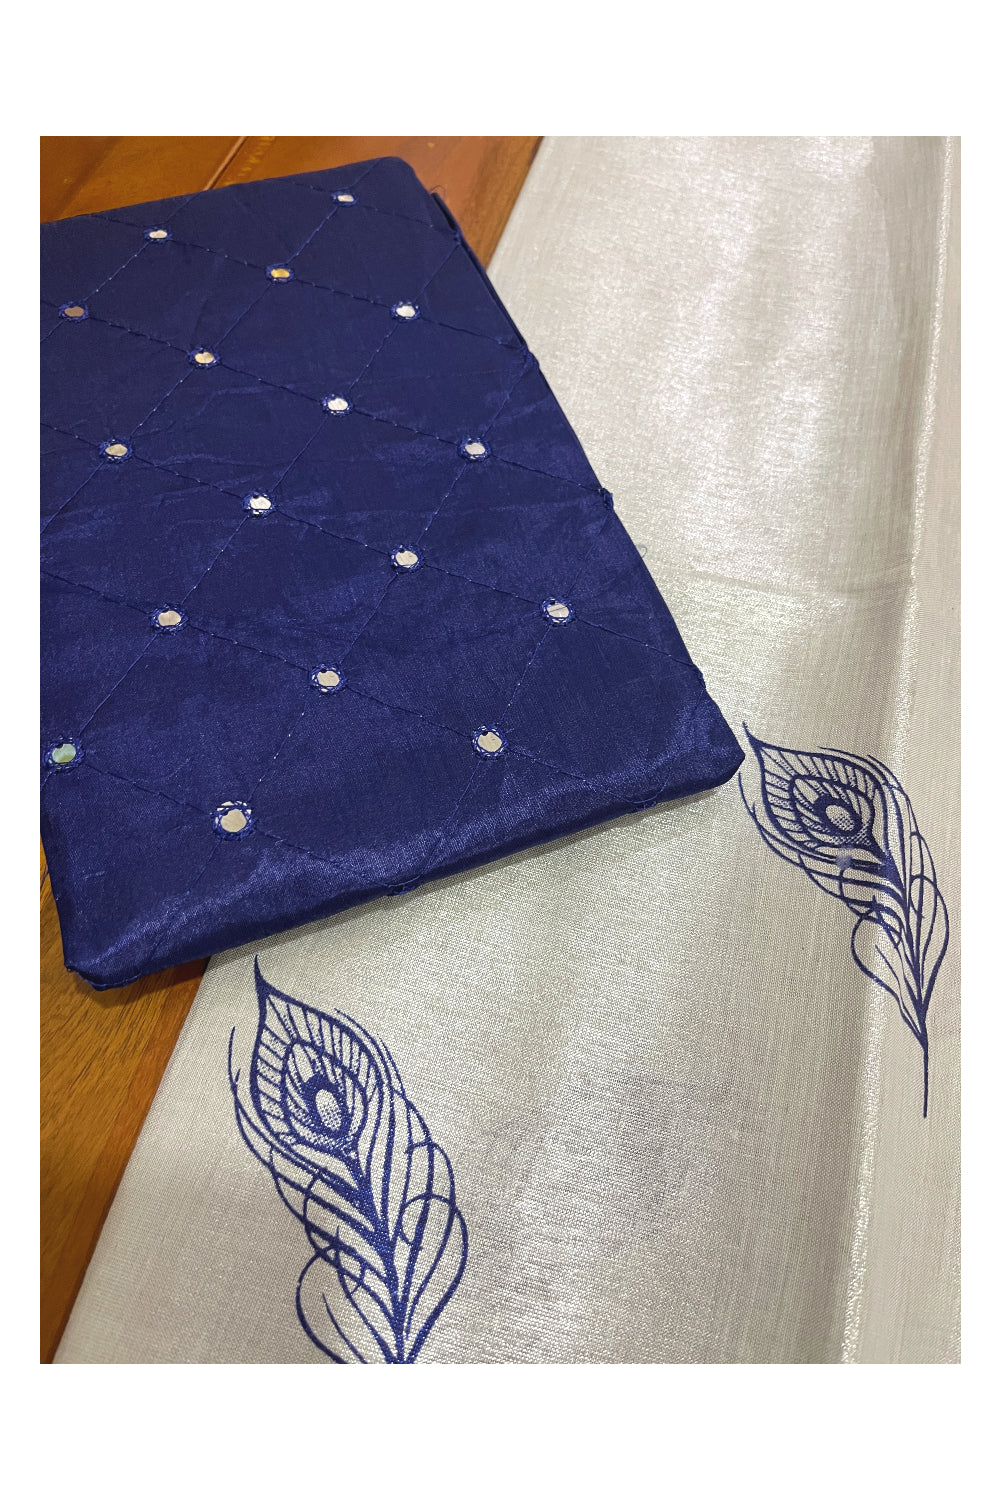 Kerala Silver Tissue Block Printed Pavada and Blue Designer Blouse Material for Kids/Girls 4.3 Meters